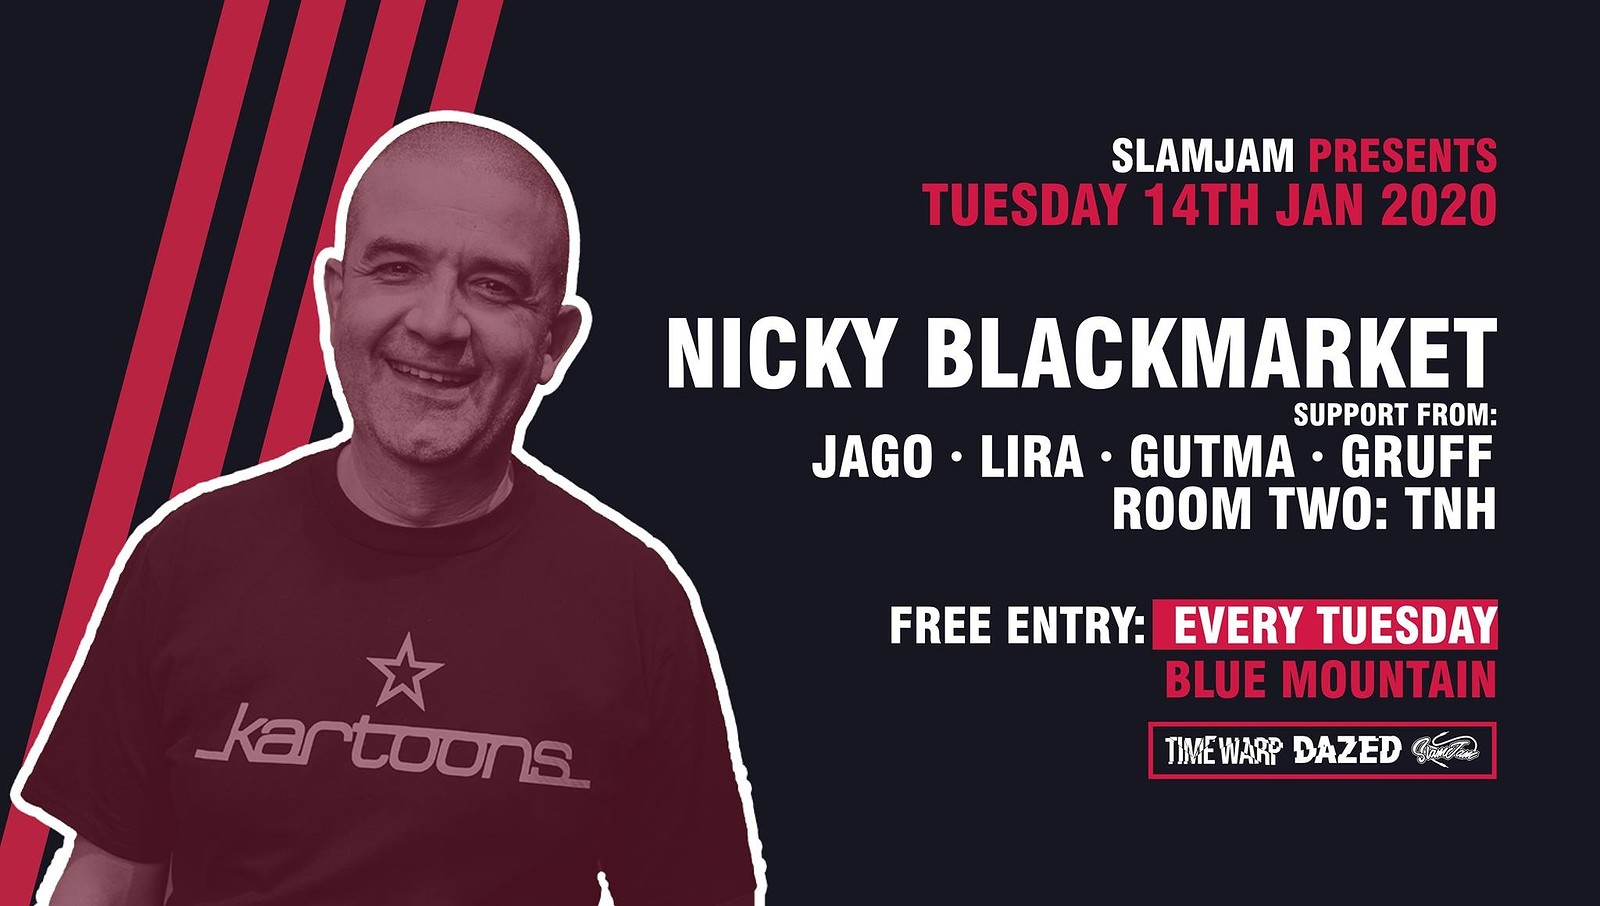 SlamJam 082: Nicky Blackmarket - Free Entry at Blue Mountain